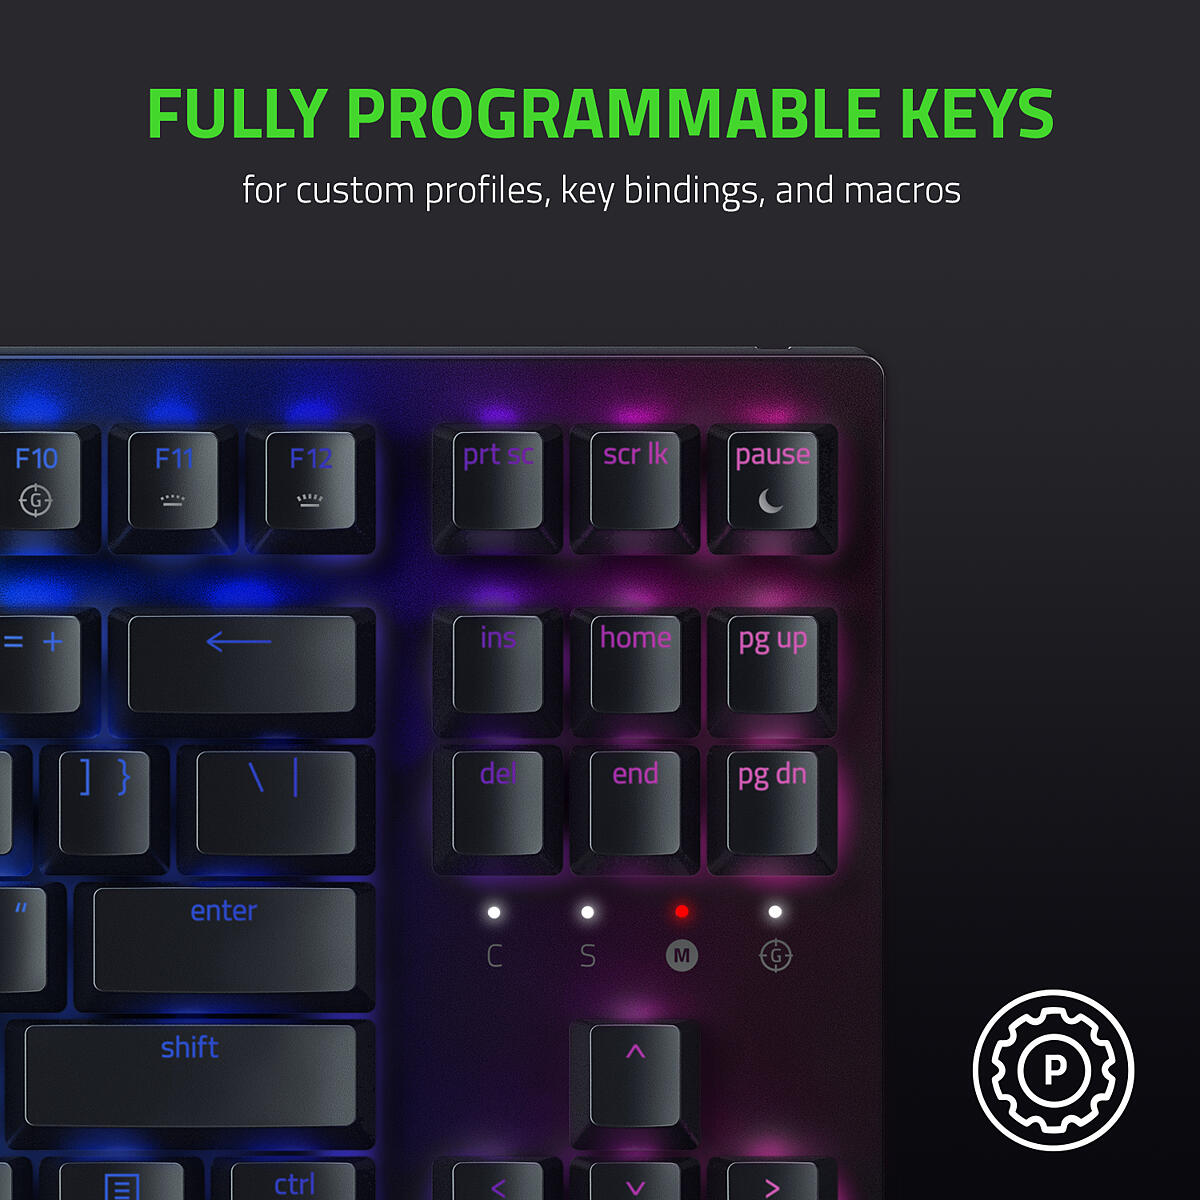 Fully programmable keys for custom profiles, key bindings, and macros